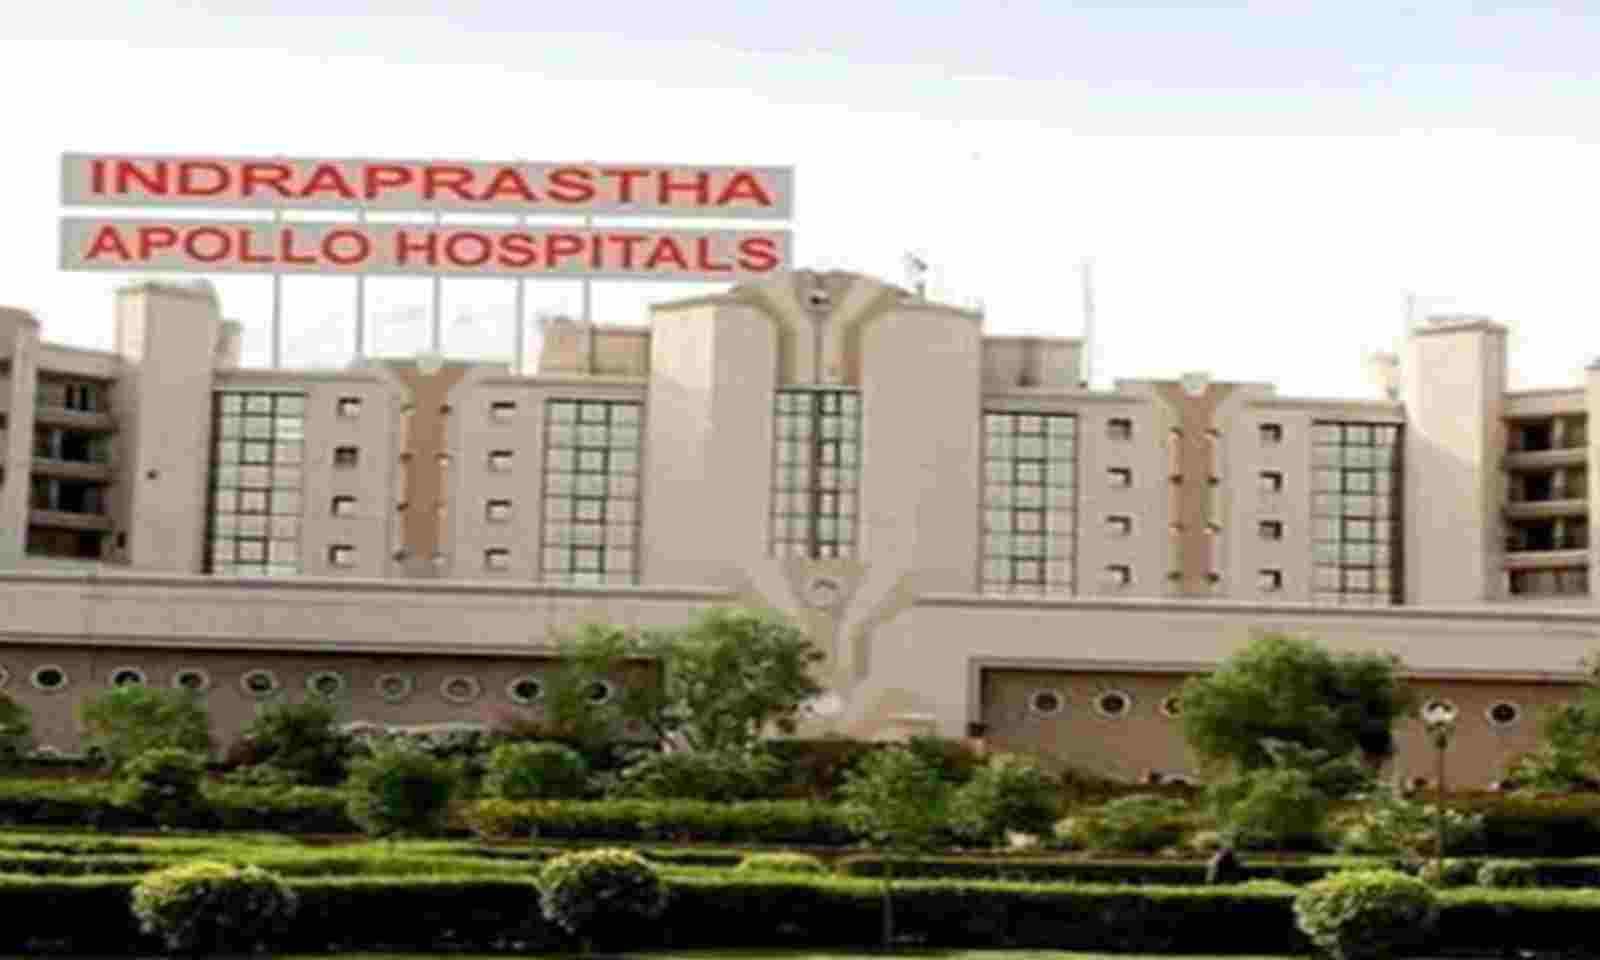 Indraprastha Apollo Hospital  - Best Hospital for Epilepsy Treatment In India